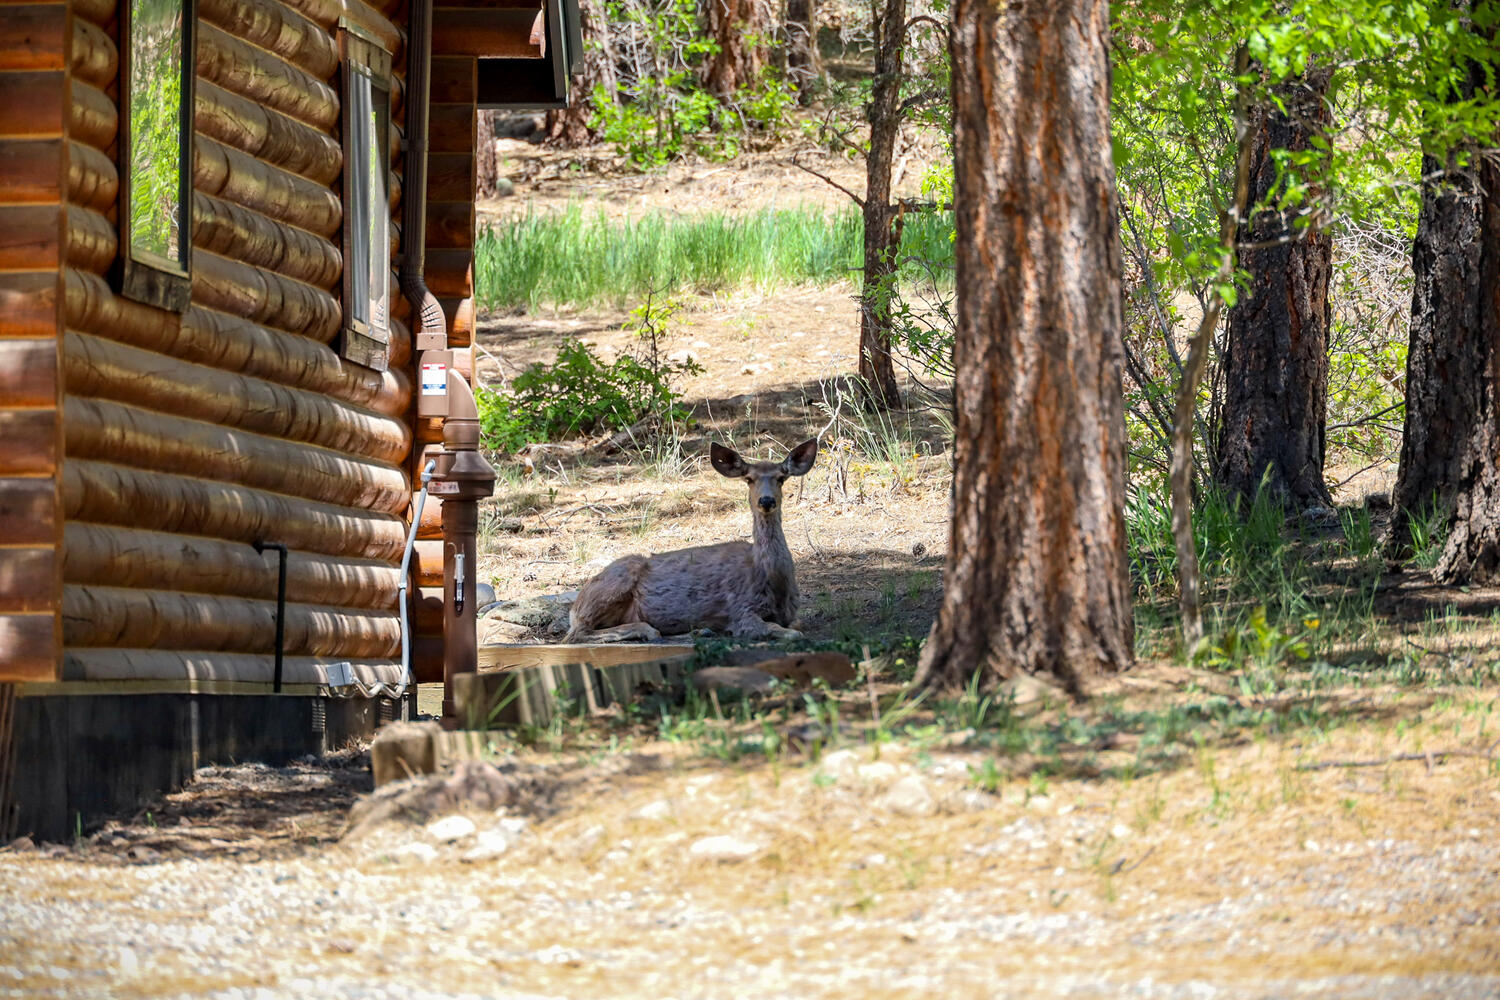 Millie's Meadow | Pagosa Springs, CO | Log Cabin